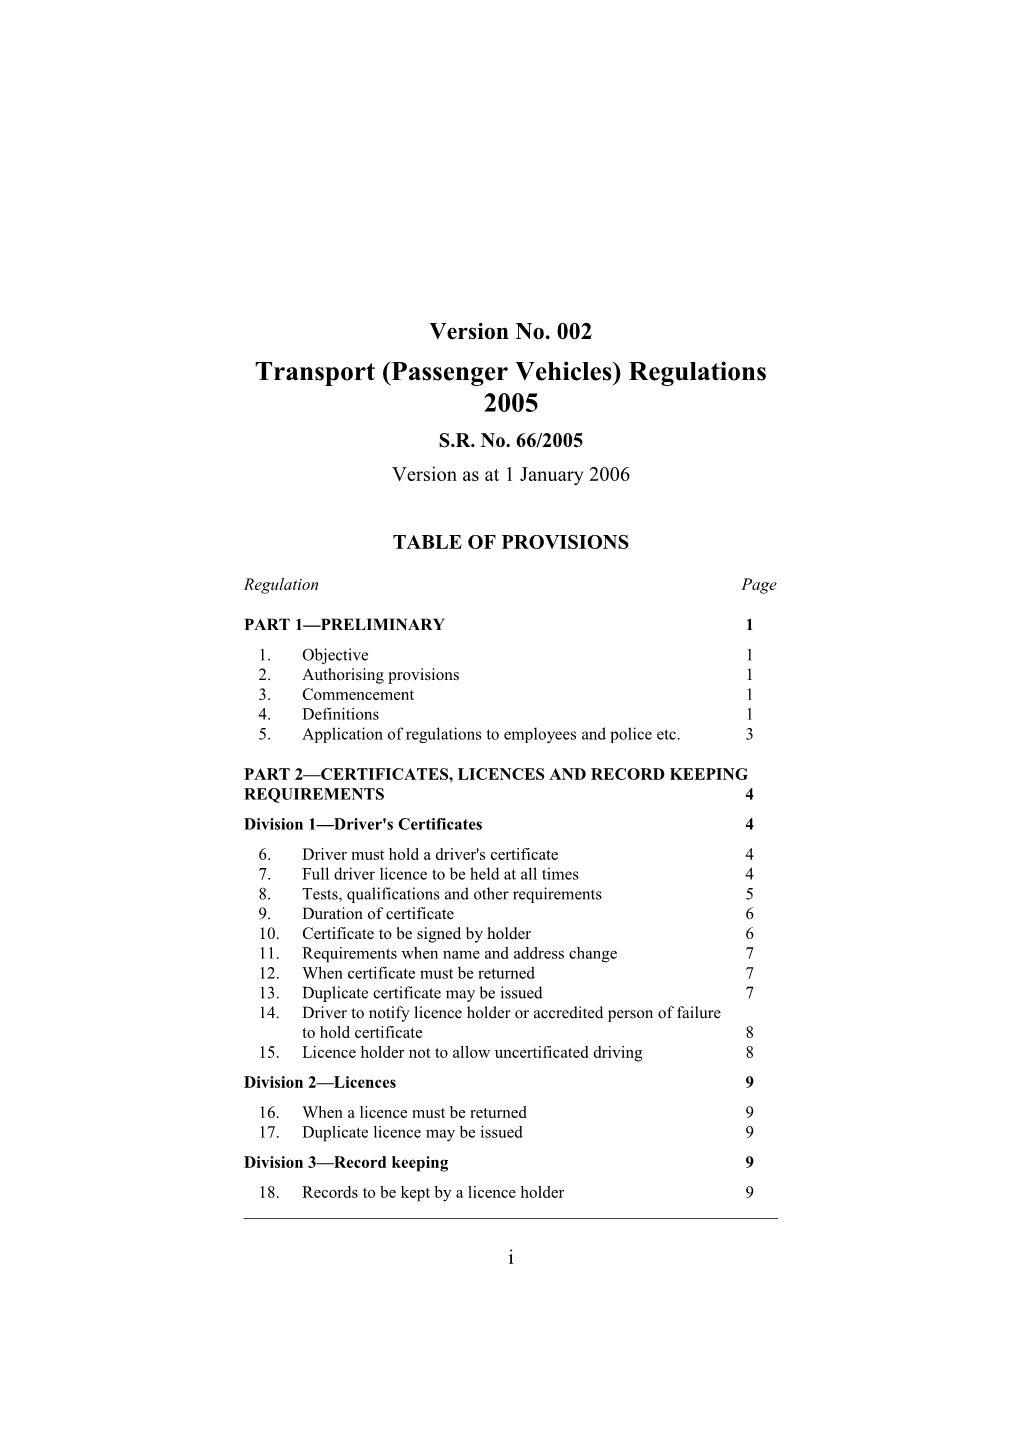 Transport (Passenger Vehicles) Regulations 2005